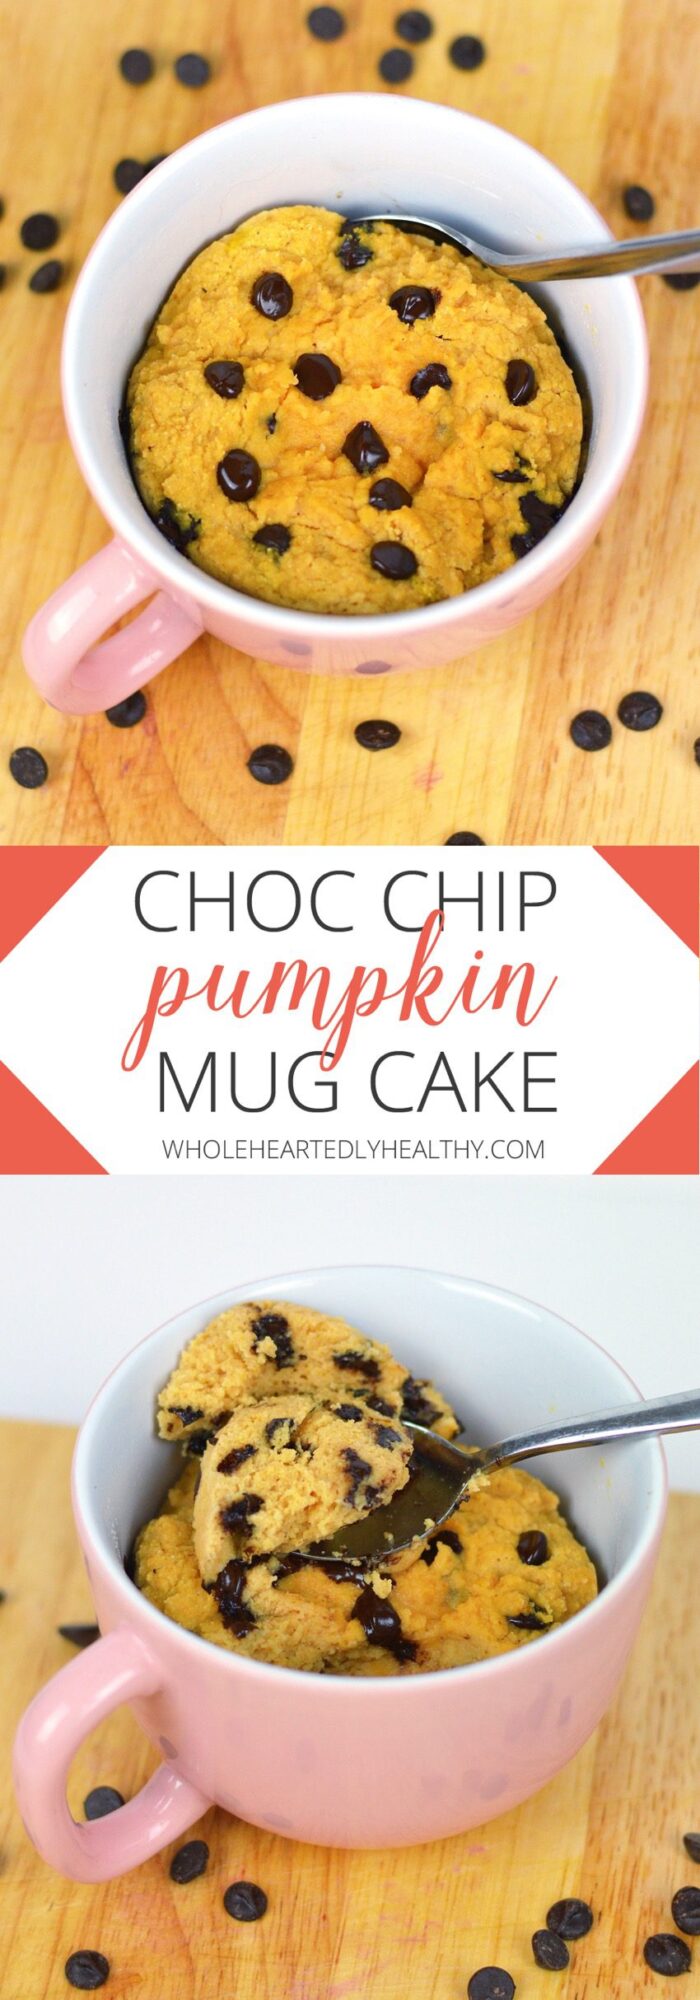 Choc chip pumpkin mug cake recipe